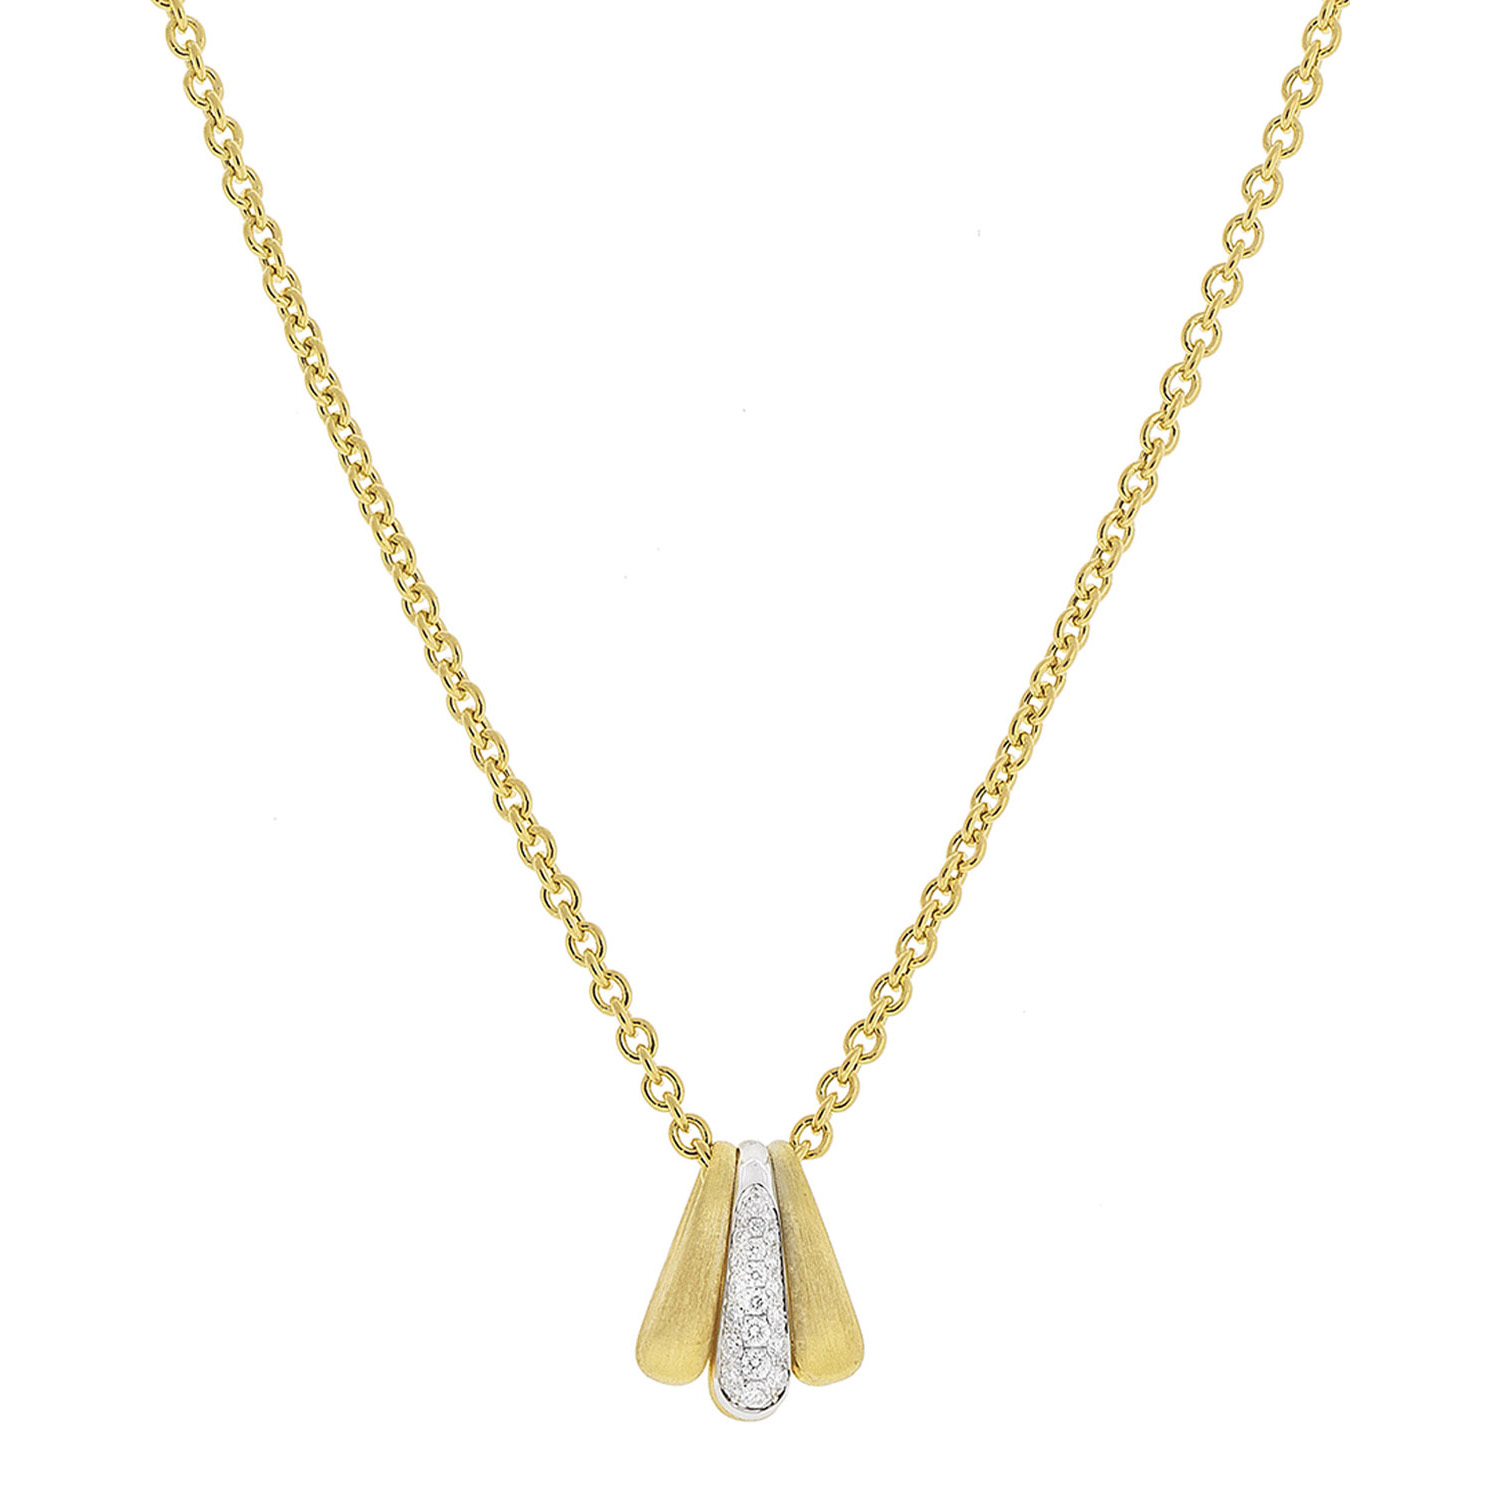 Wholesale Custom OEM/ODM Jewelry 18k Diamond Pendant Necklace Jewelry Supplier OEM